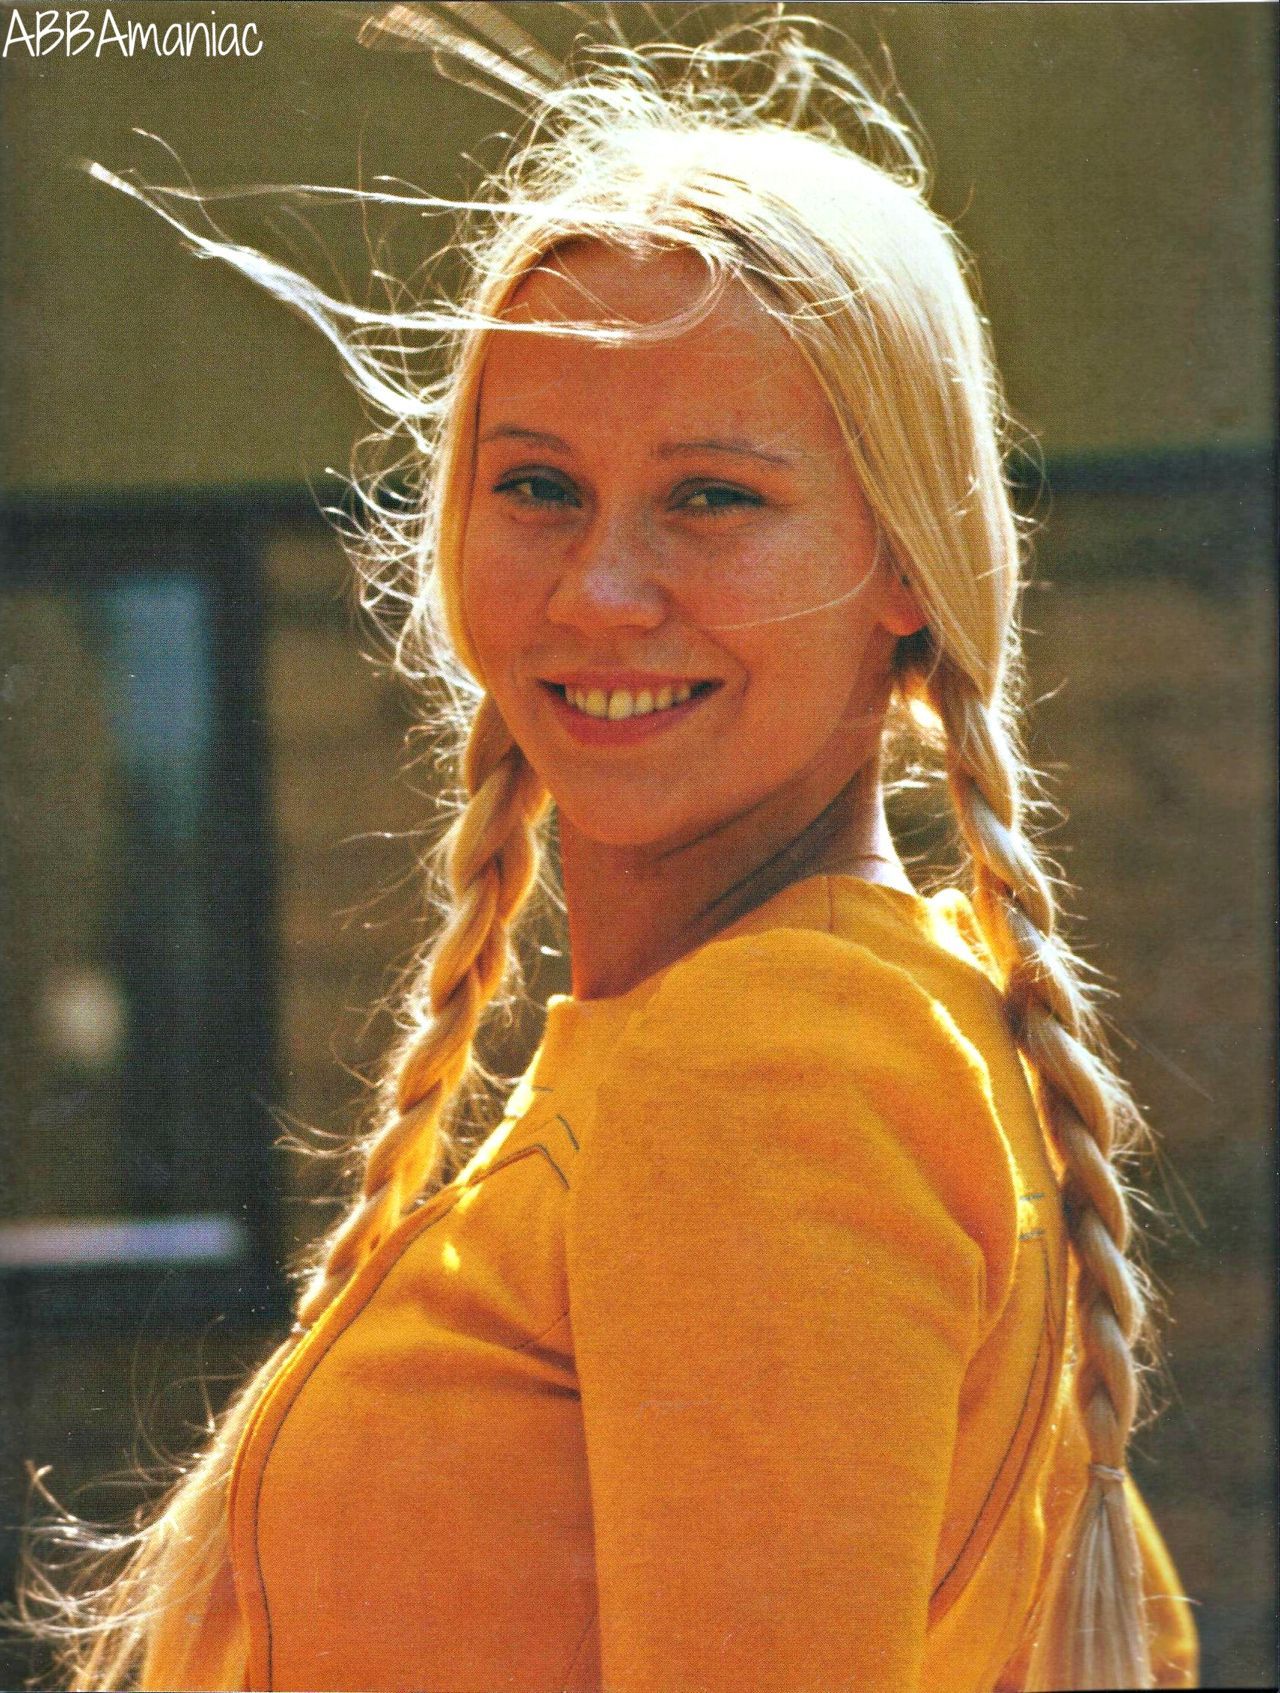 Anna 1975 Agnetha Faltskog Abba Agnetha Ase Faltskog